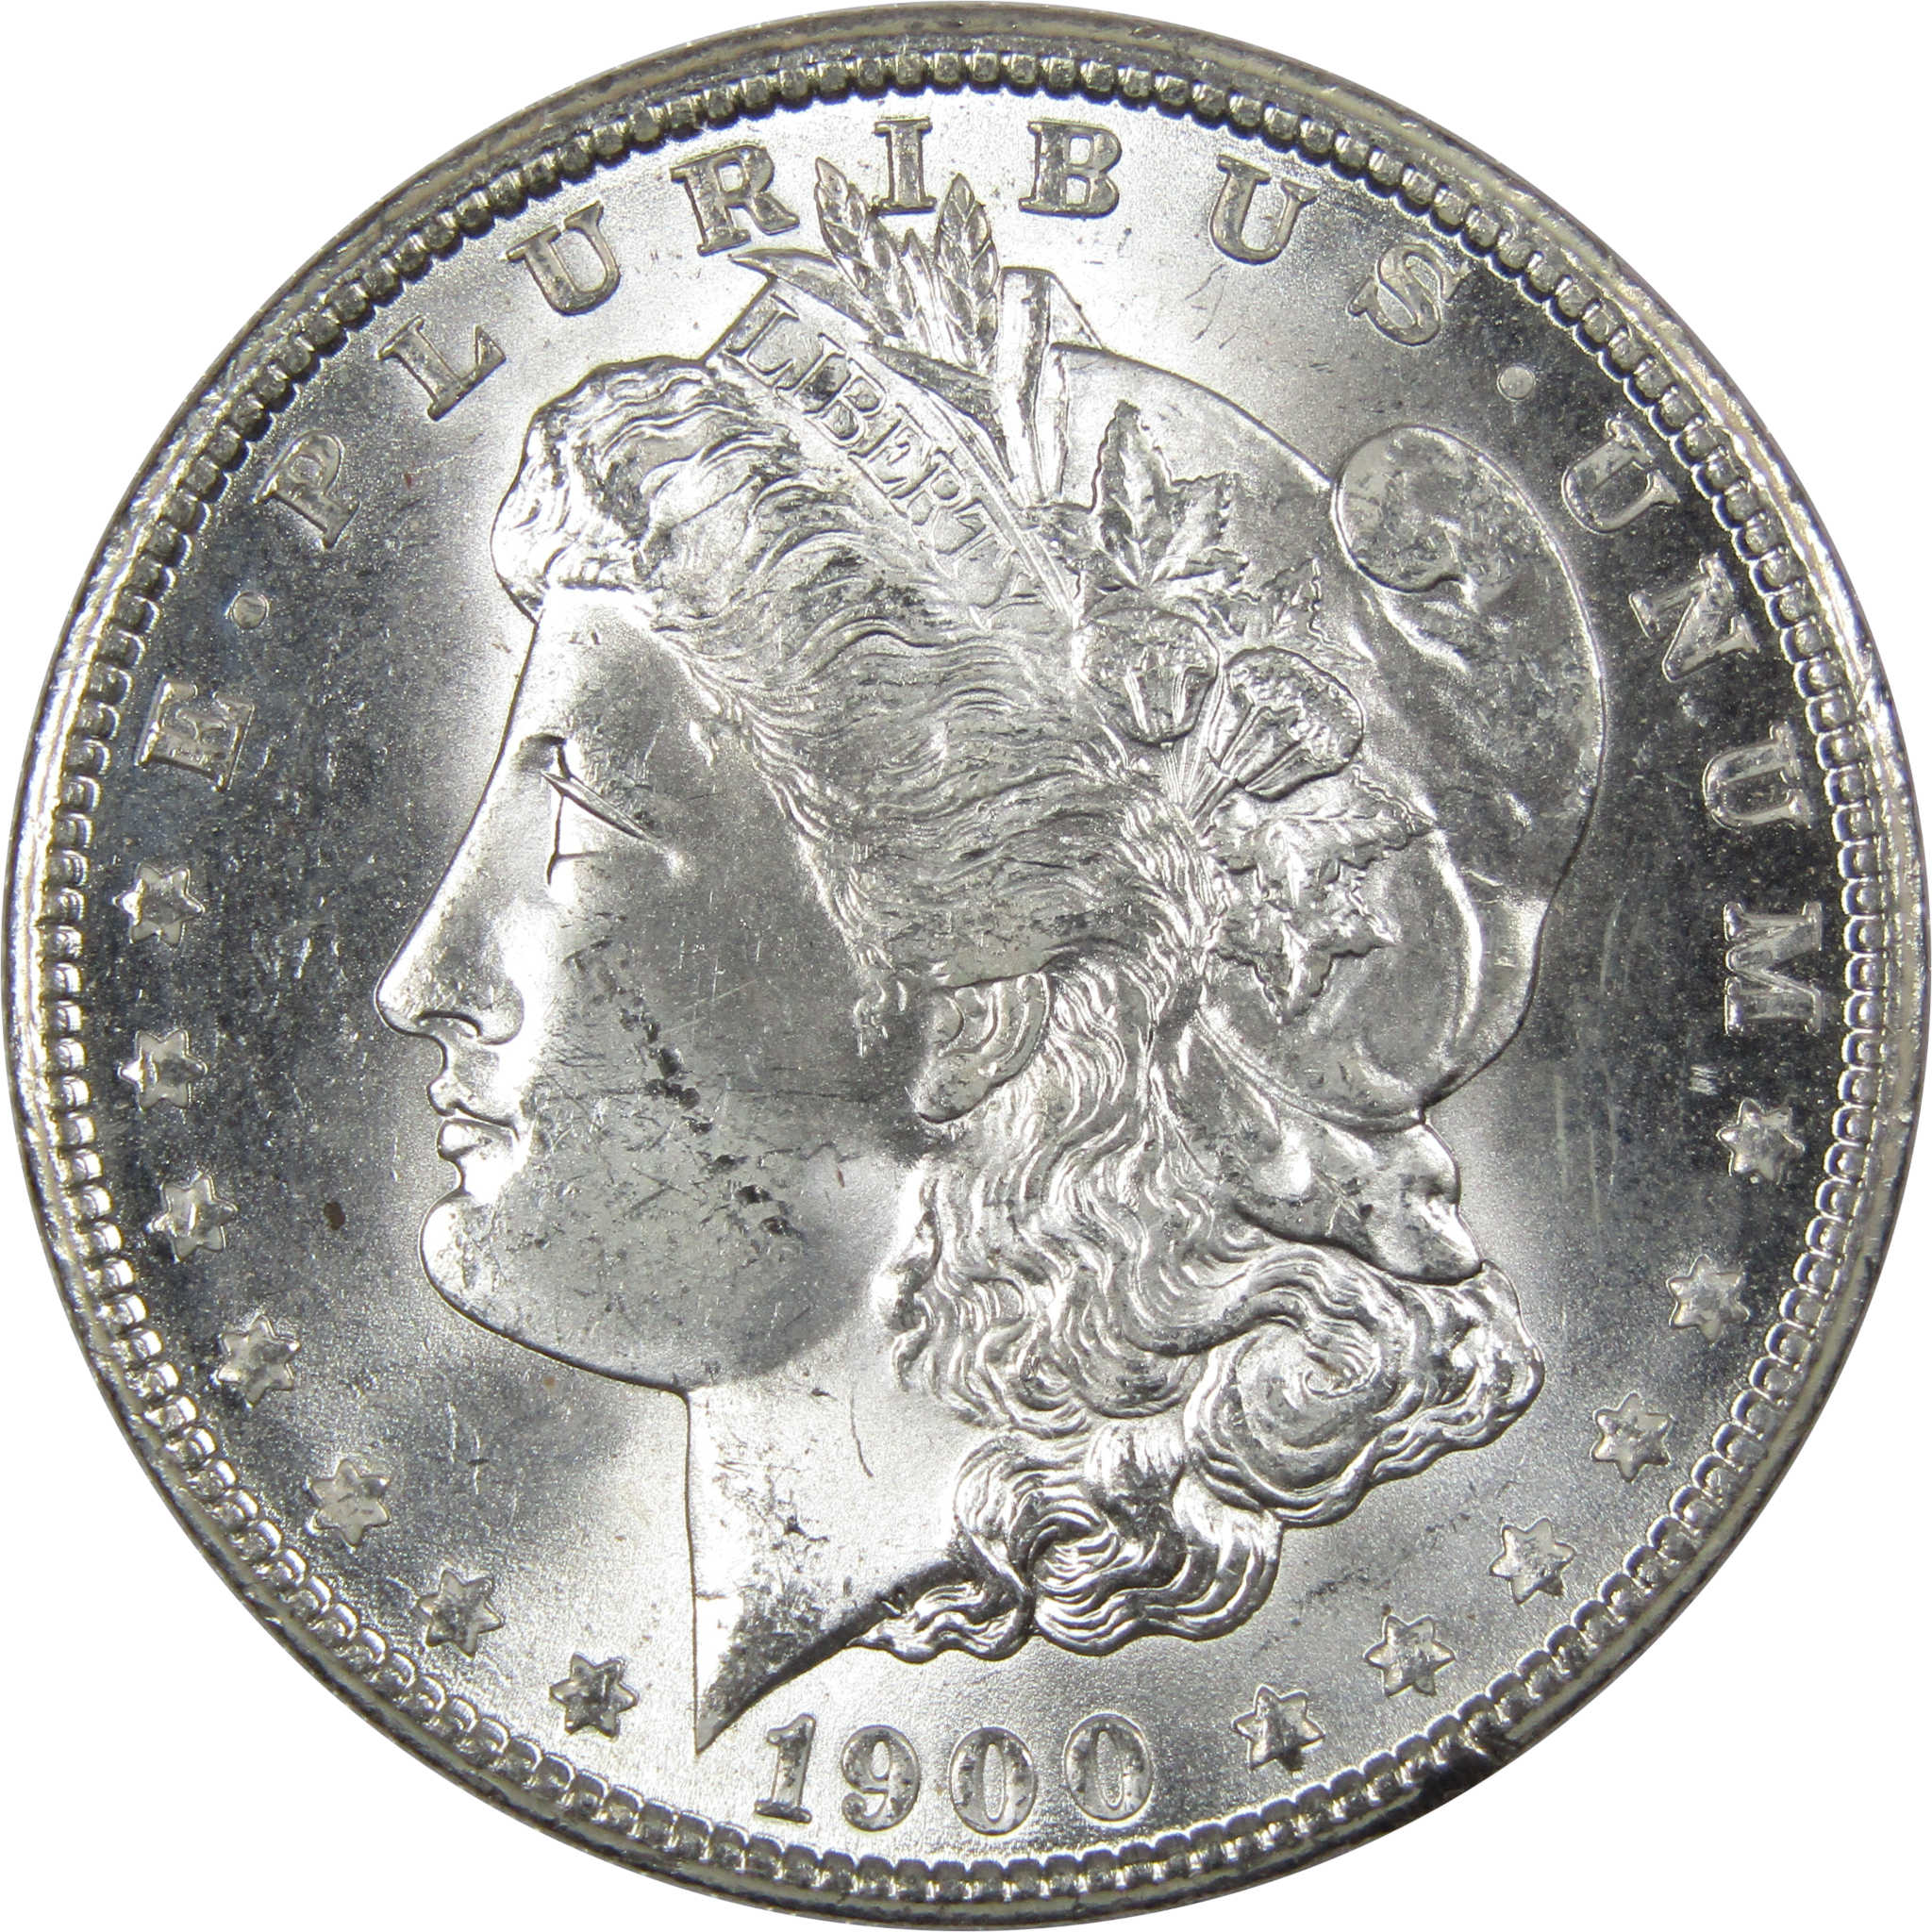 1900 O Morgan Dollar BU Uncirculated Mint State 90% Silver SKU:IPC9753 - Morgan coin - Morgan silver dollar - Morgan silver dollar for sale - Profile Coins &amp; Collectibles